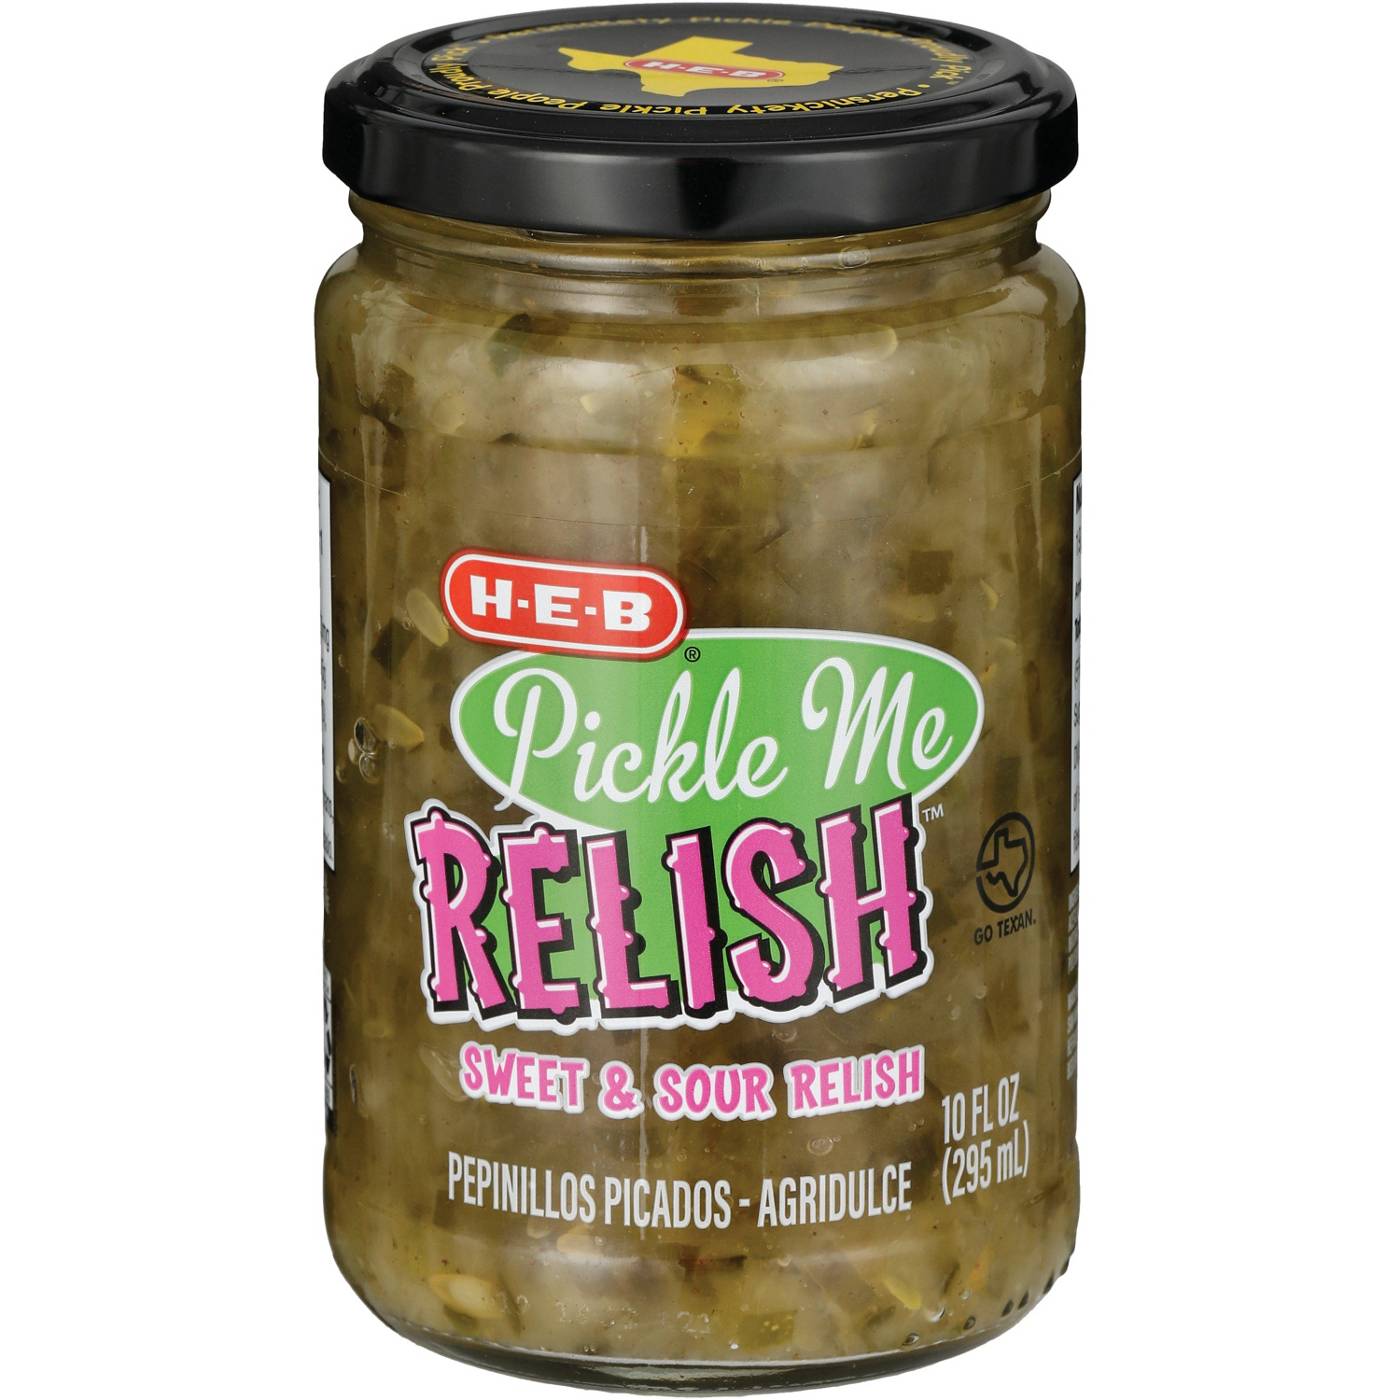 H-E-B Pickle Me Relish Sweet & Sour Relish; image 2 of 2